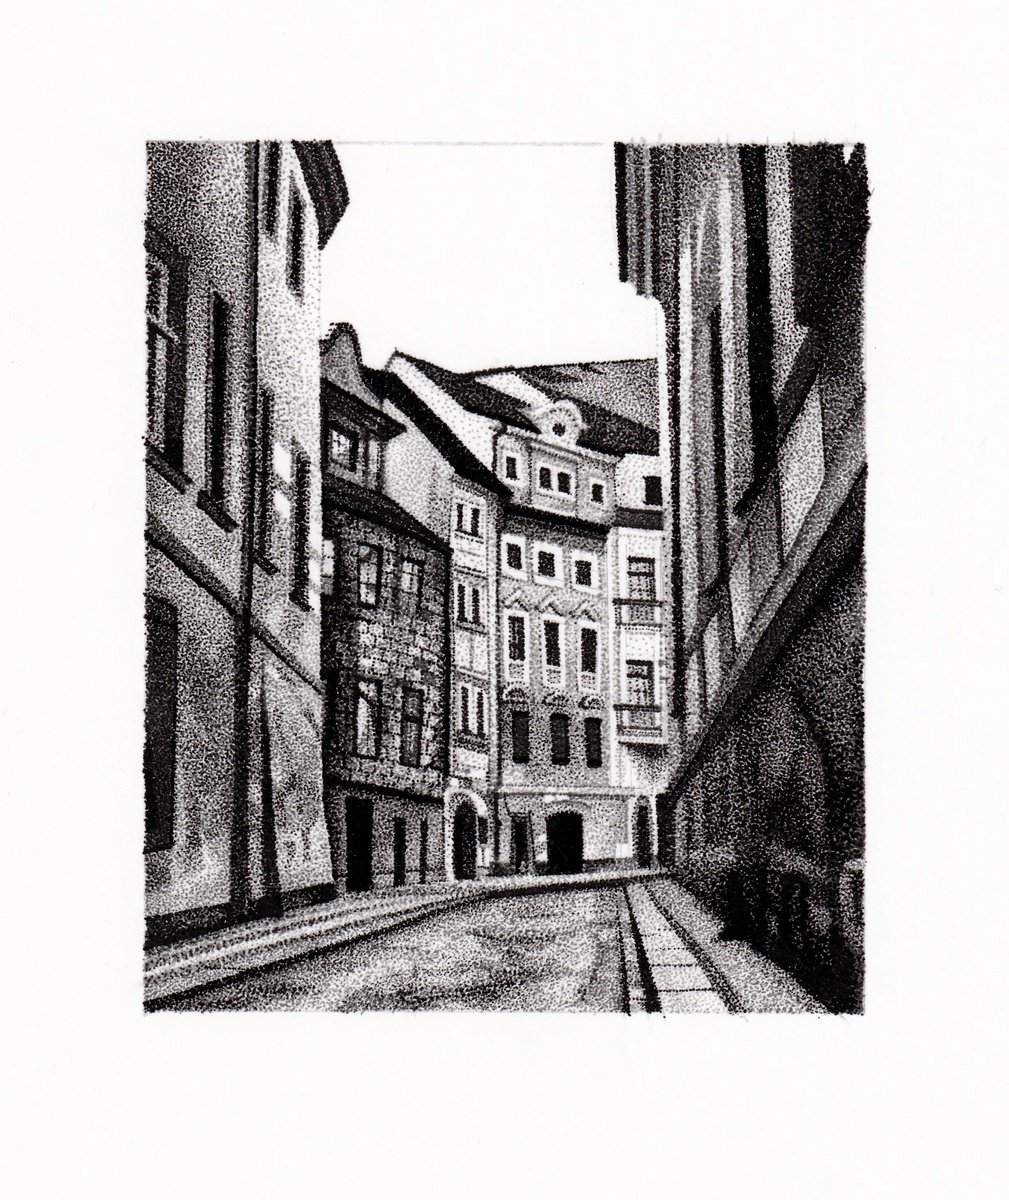 Prague Old Town Stippled Ink Drawing by Louis Savage